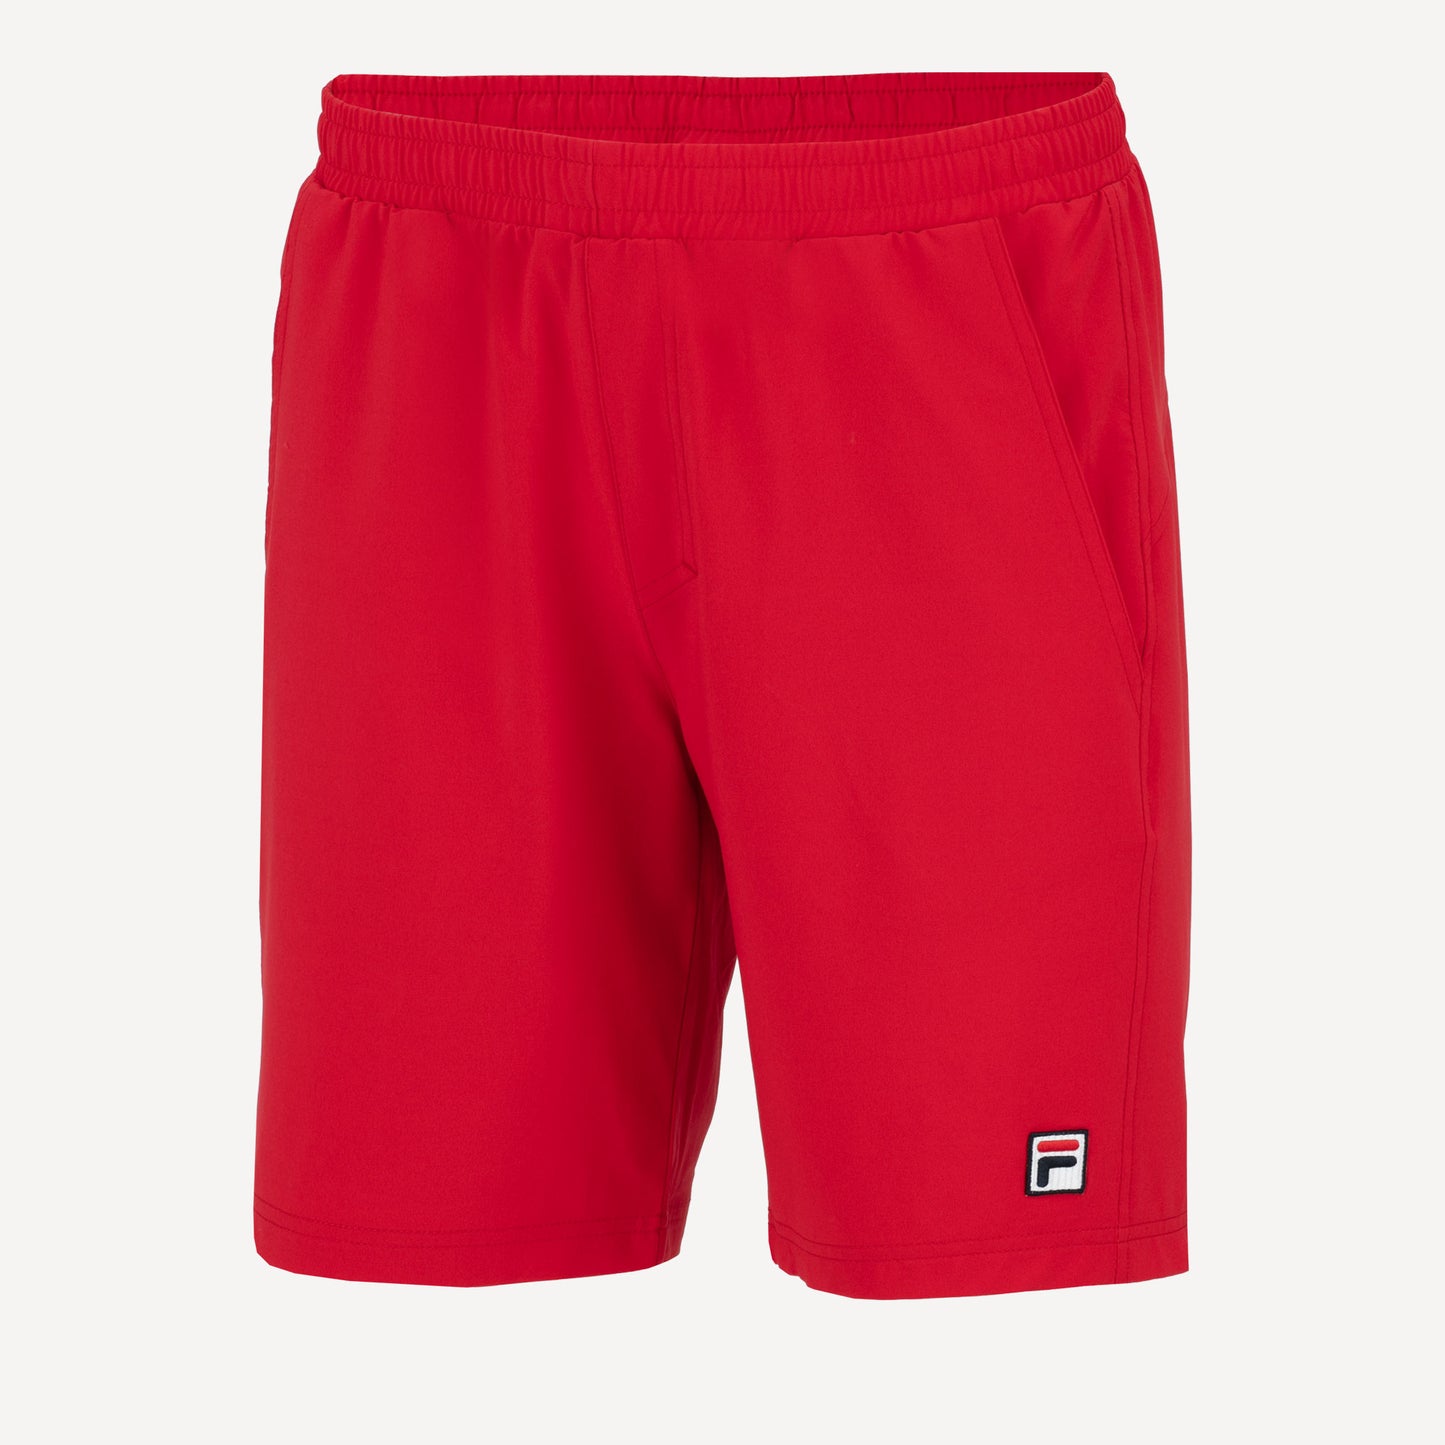 Fila Santana Men's Tennis Shorts Red (1)